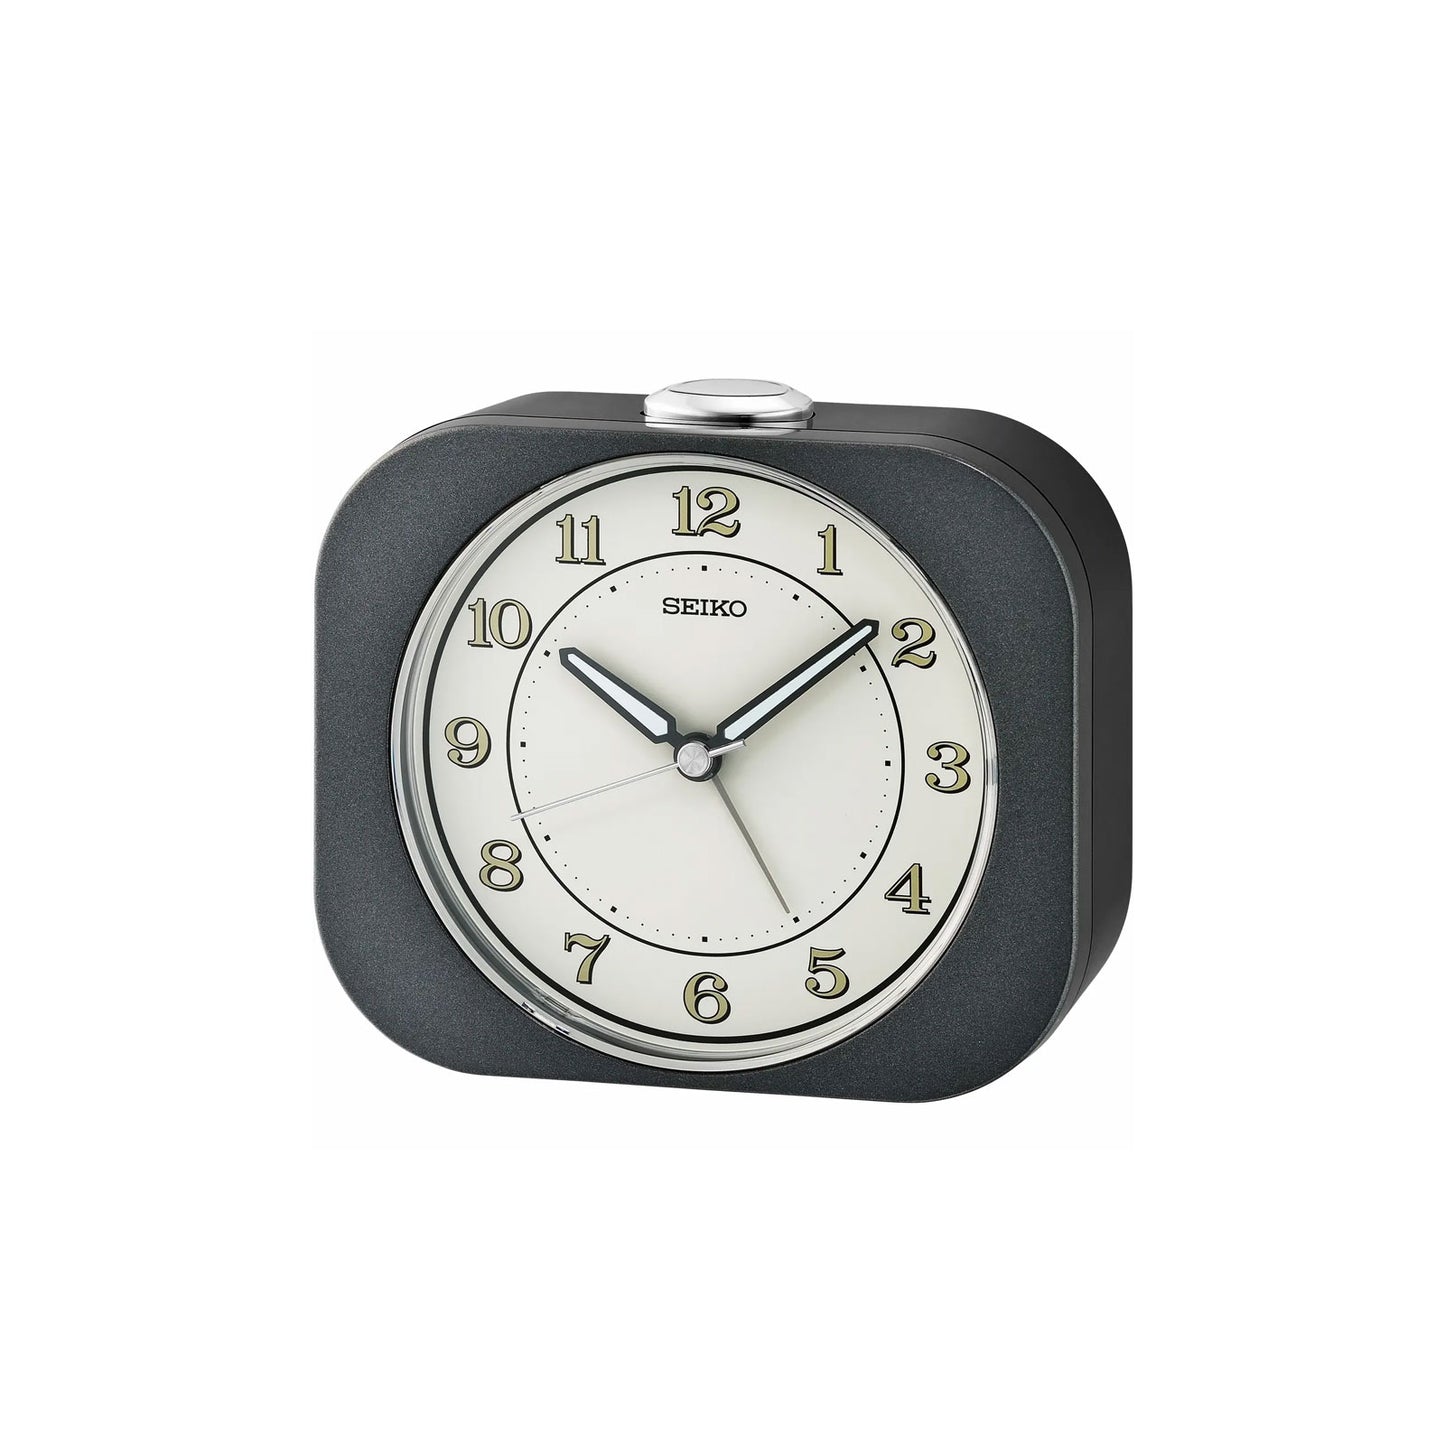 Retro Alarm Clock in Black & White